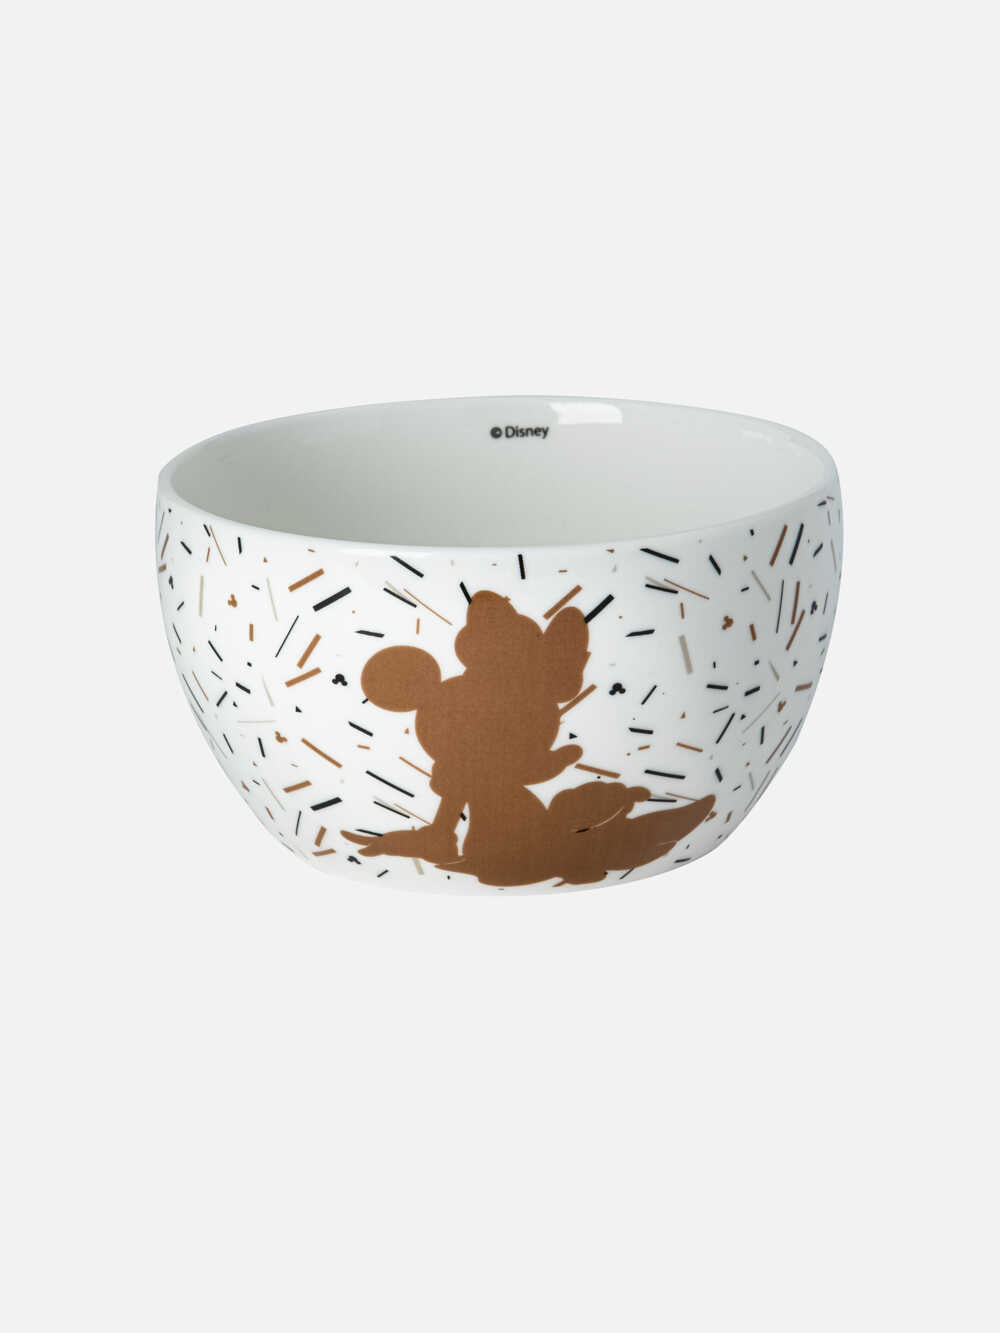 Disney Small Porcelain Bowl